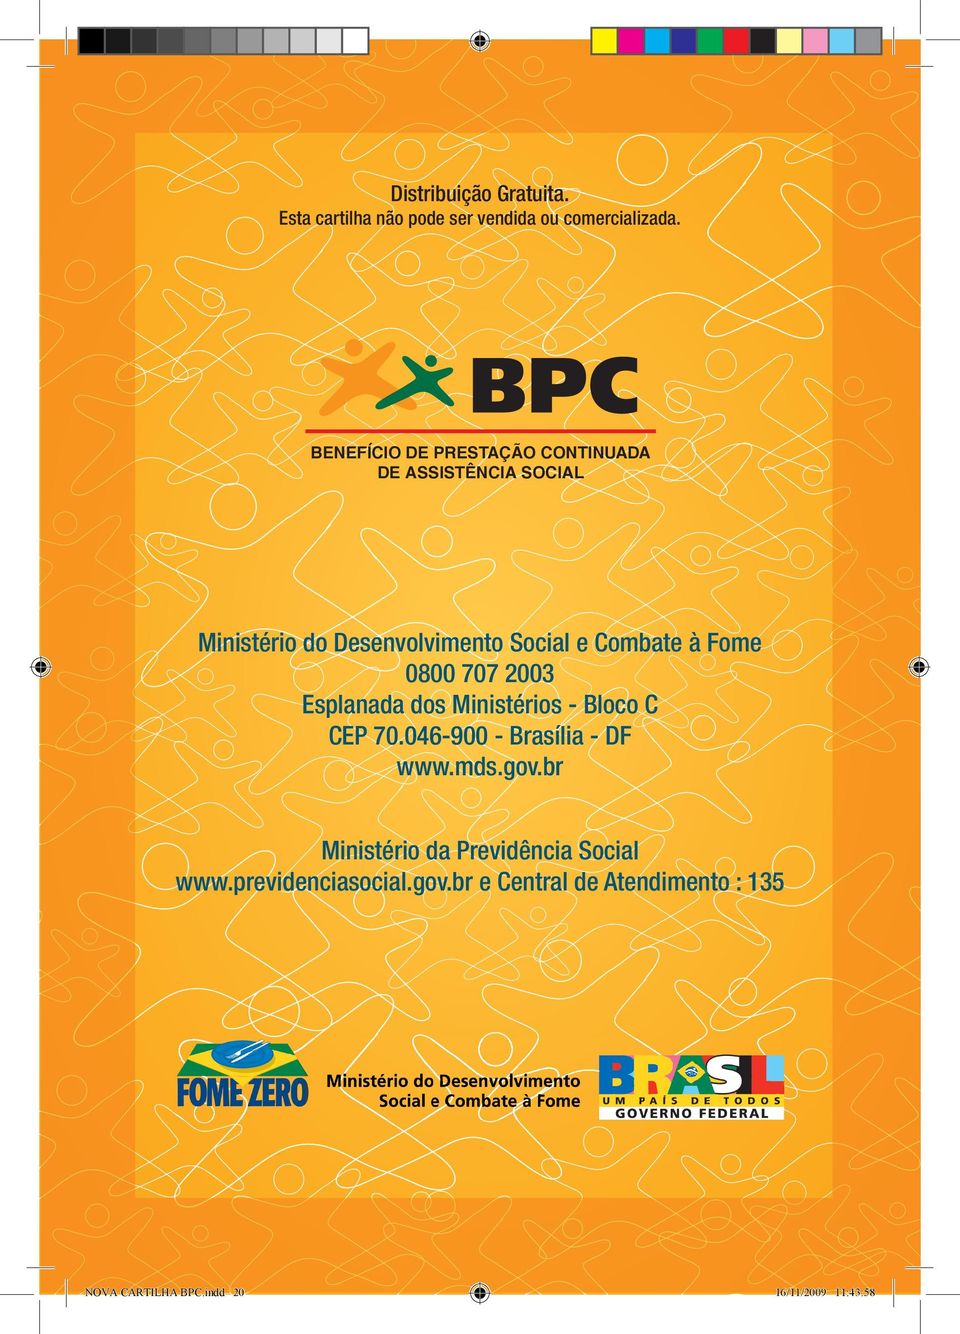 Ministérios - Bloco C CEP 70.046-900 - Brasília - DF www.mds.gov.